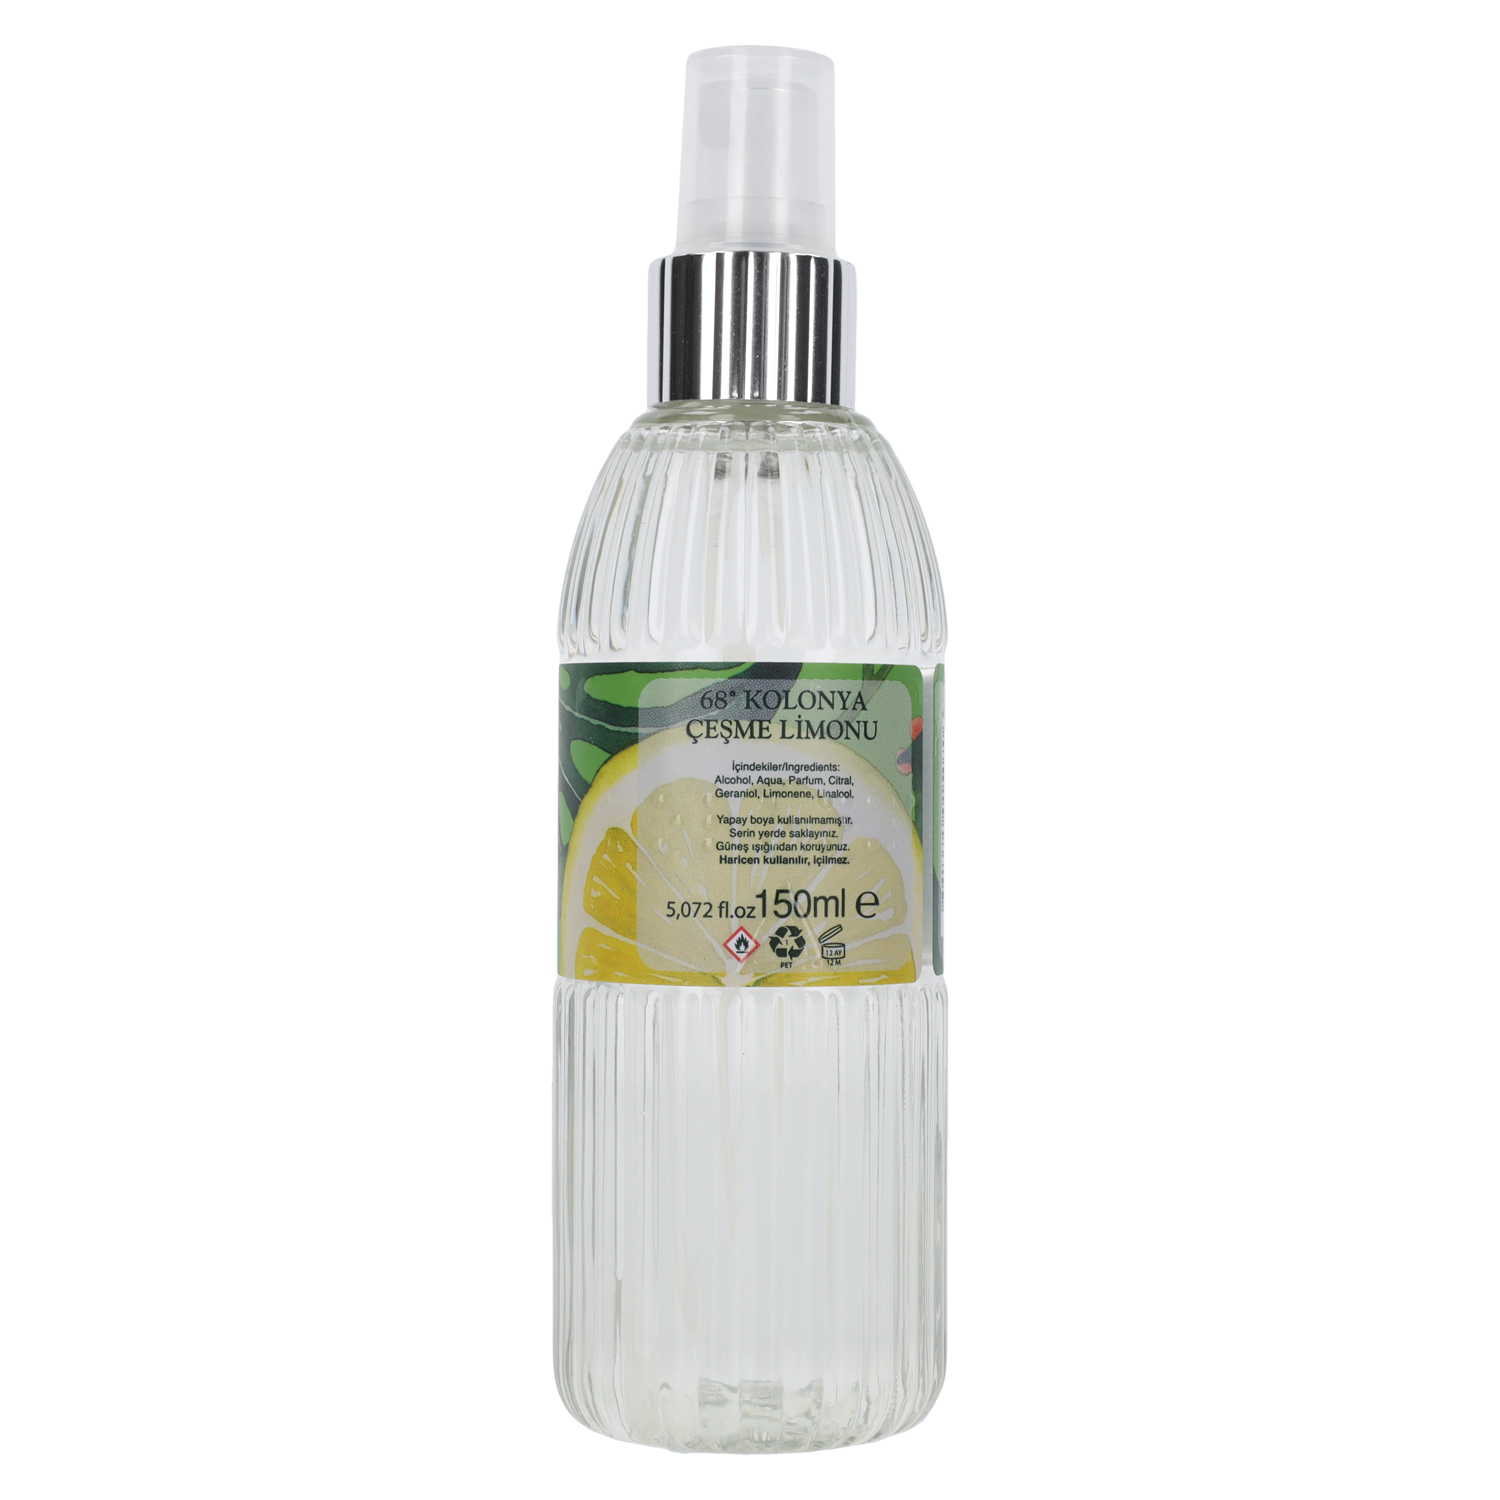 Kolonya Cesme Limonu (Zitrus) Duft150 ml Spray